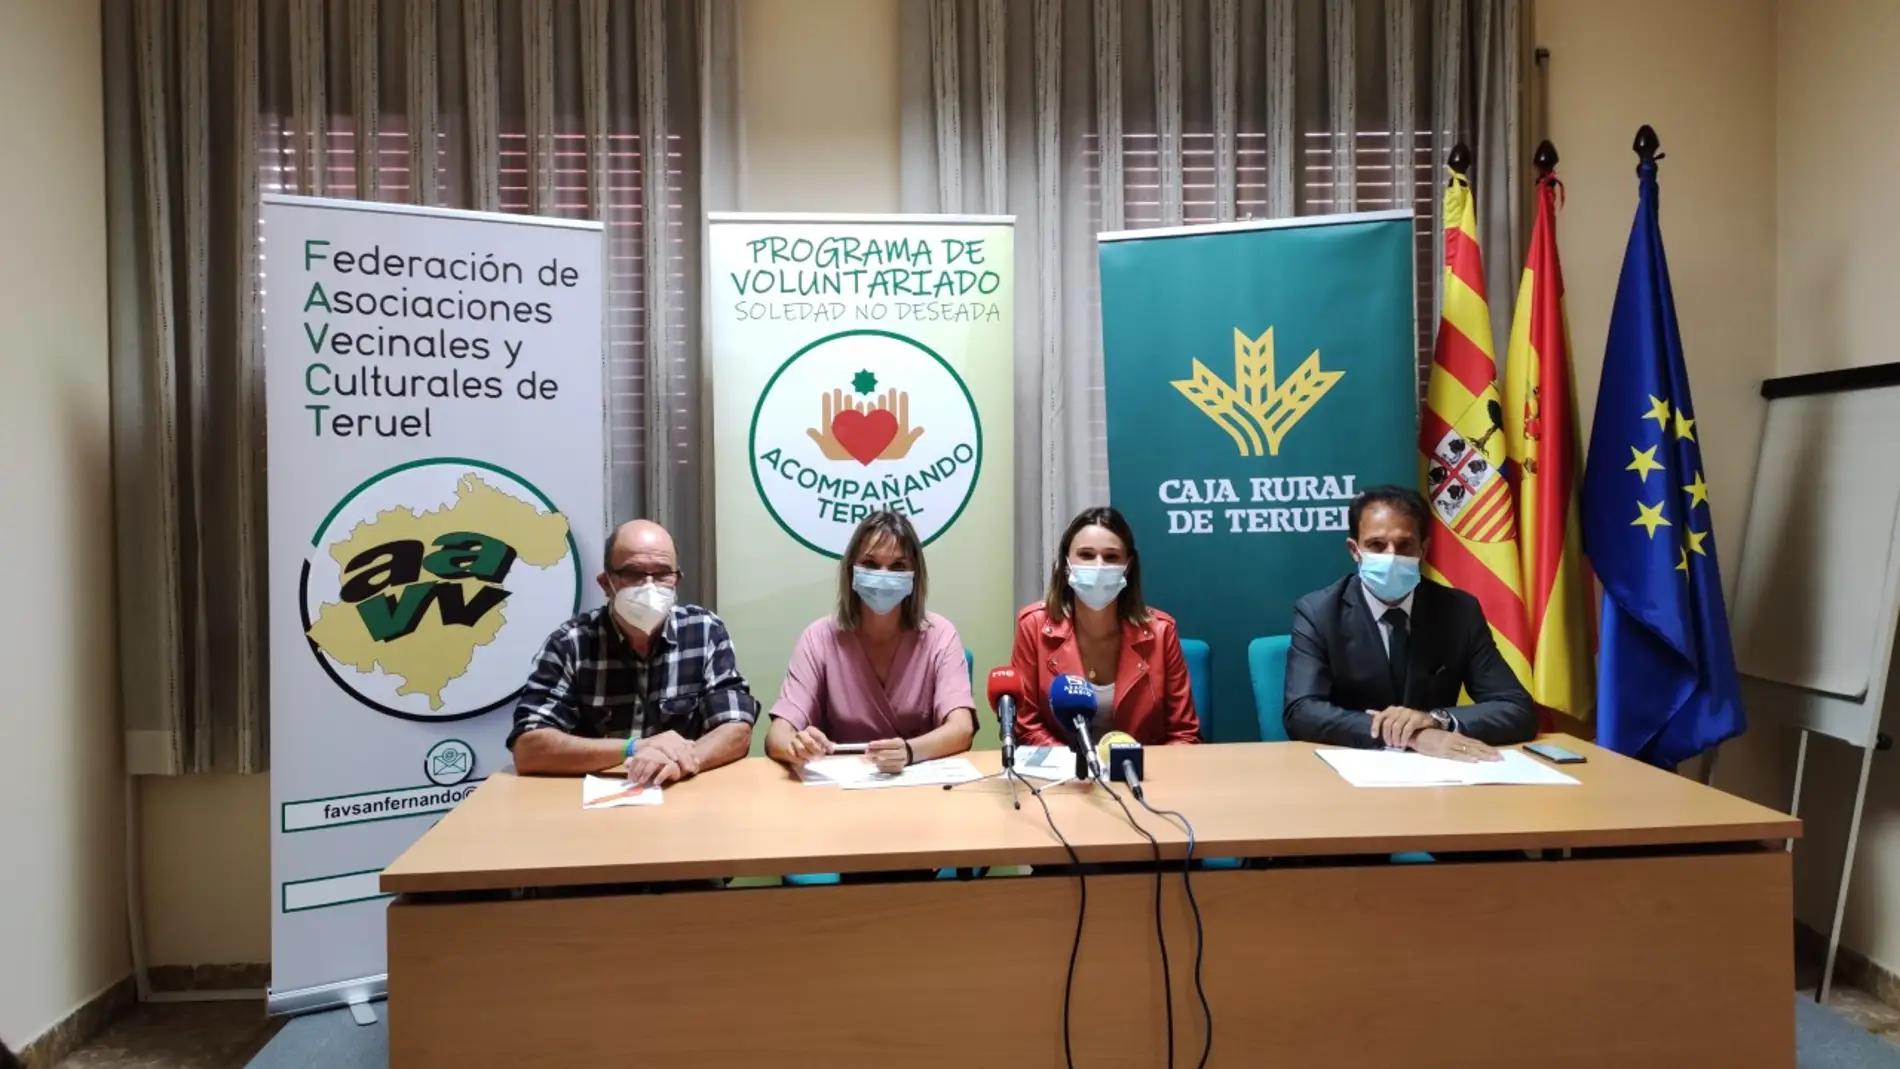 Presentación Acompañando-T Sierra Albarracín